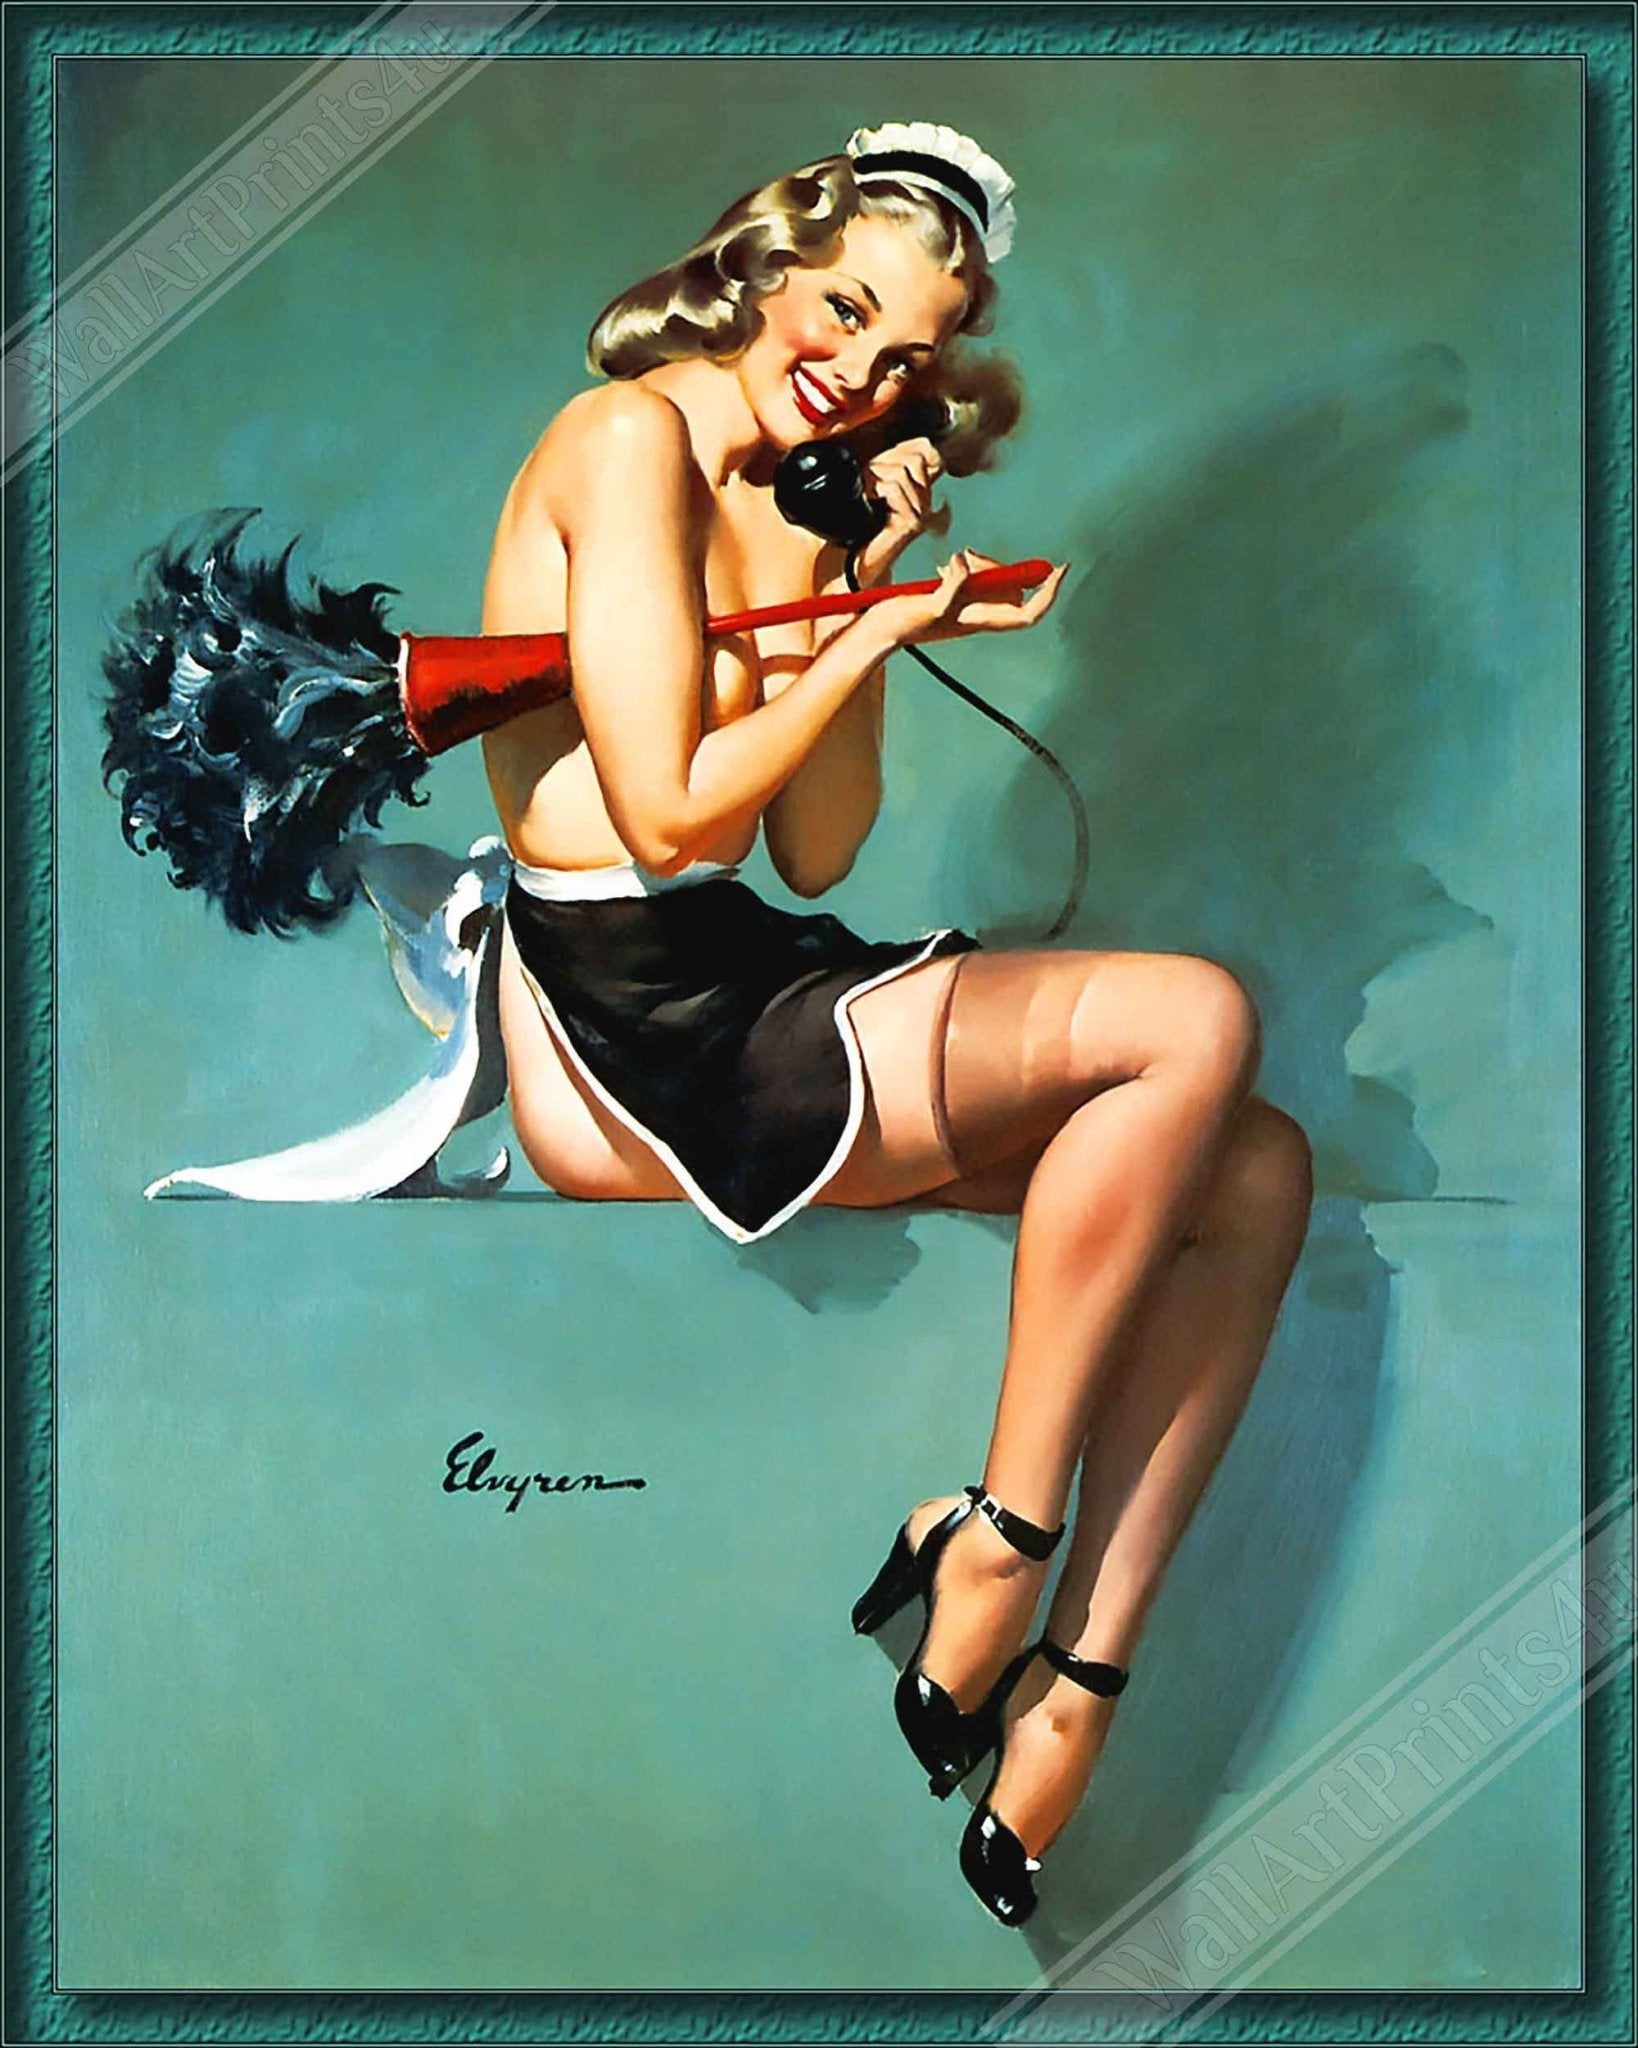 Vintage Pin Up Girl Framed, On The Phone Cleaning - Gil Elvgren, Vintage Art - Retro Pin Up Girl Framed Print - Late 1940'S - 1950'S - WallArtPrints4U